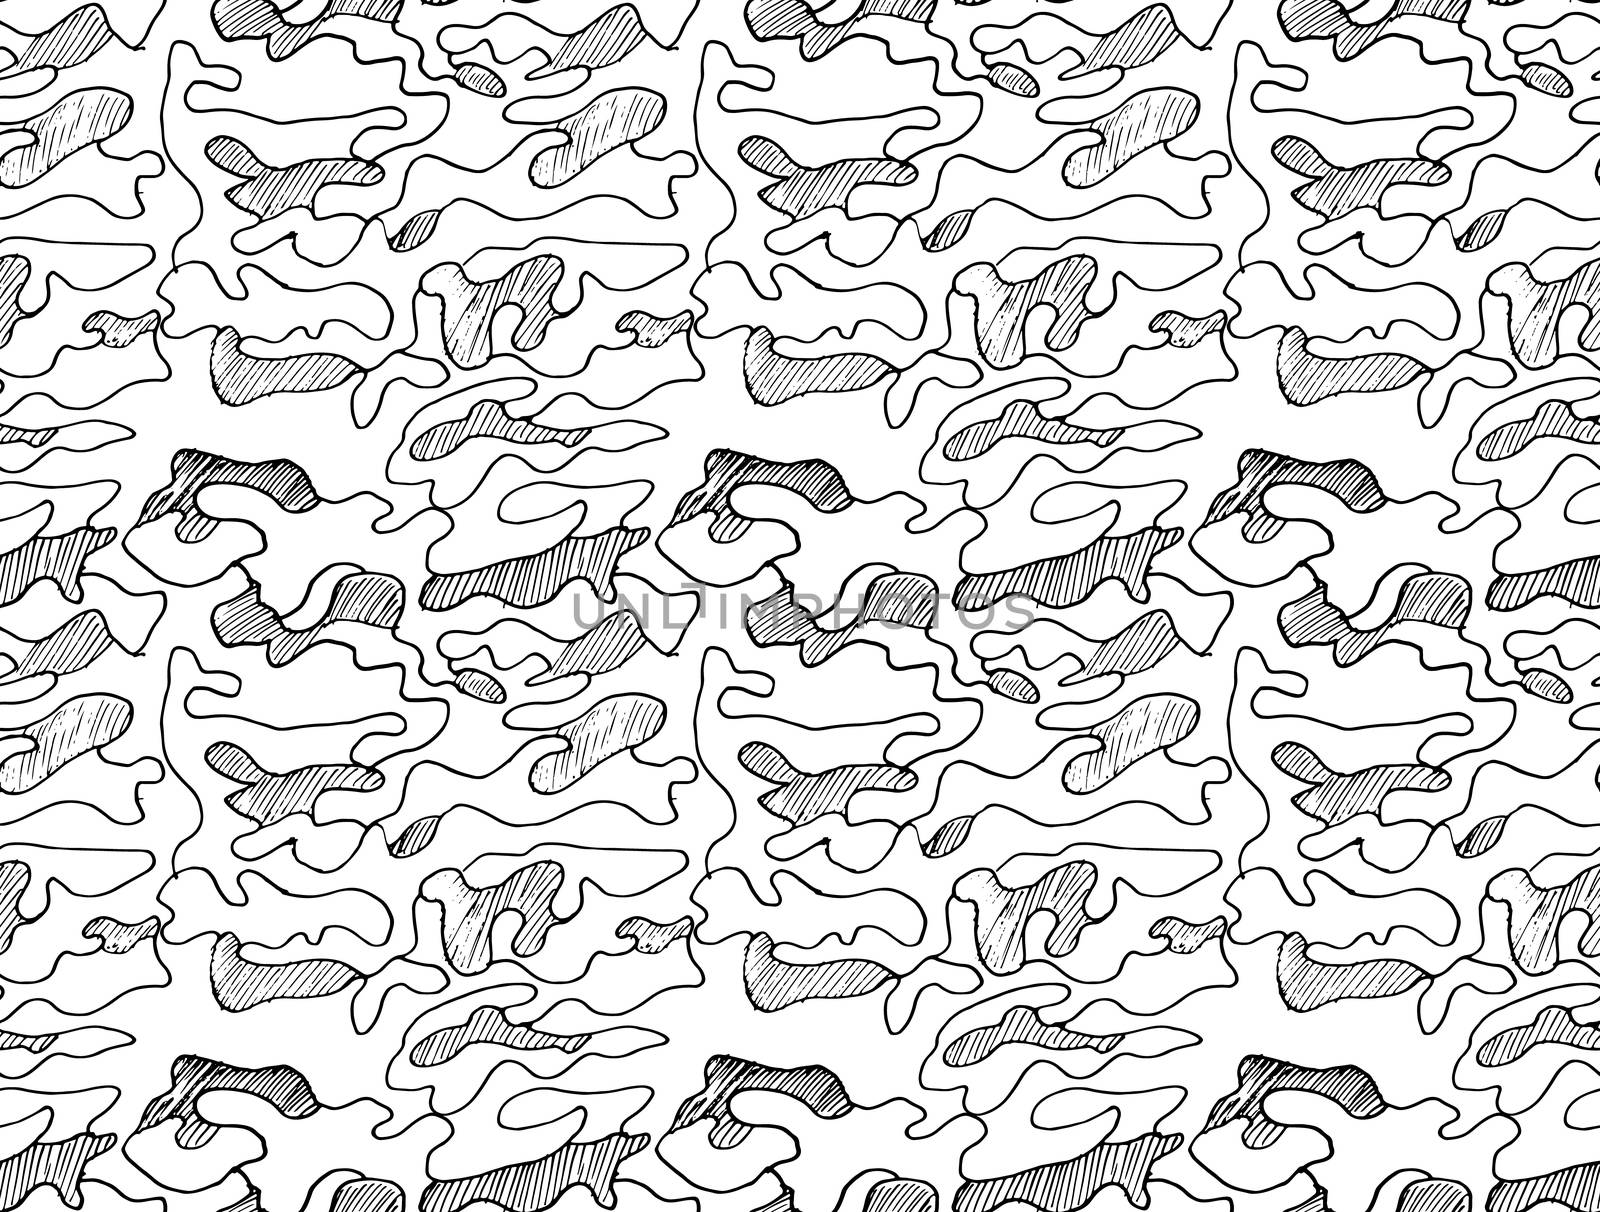 Hand drawn abstract camouflage khaki seamless pattern, vector illustration.